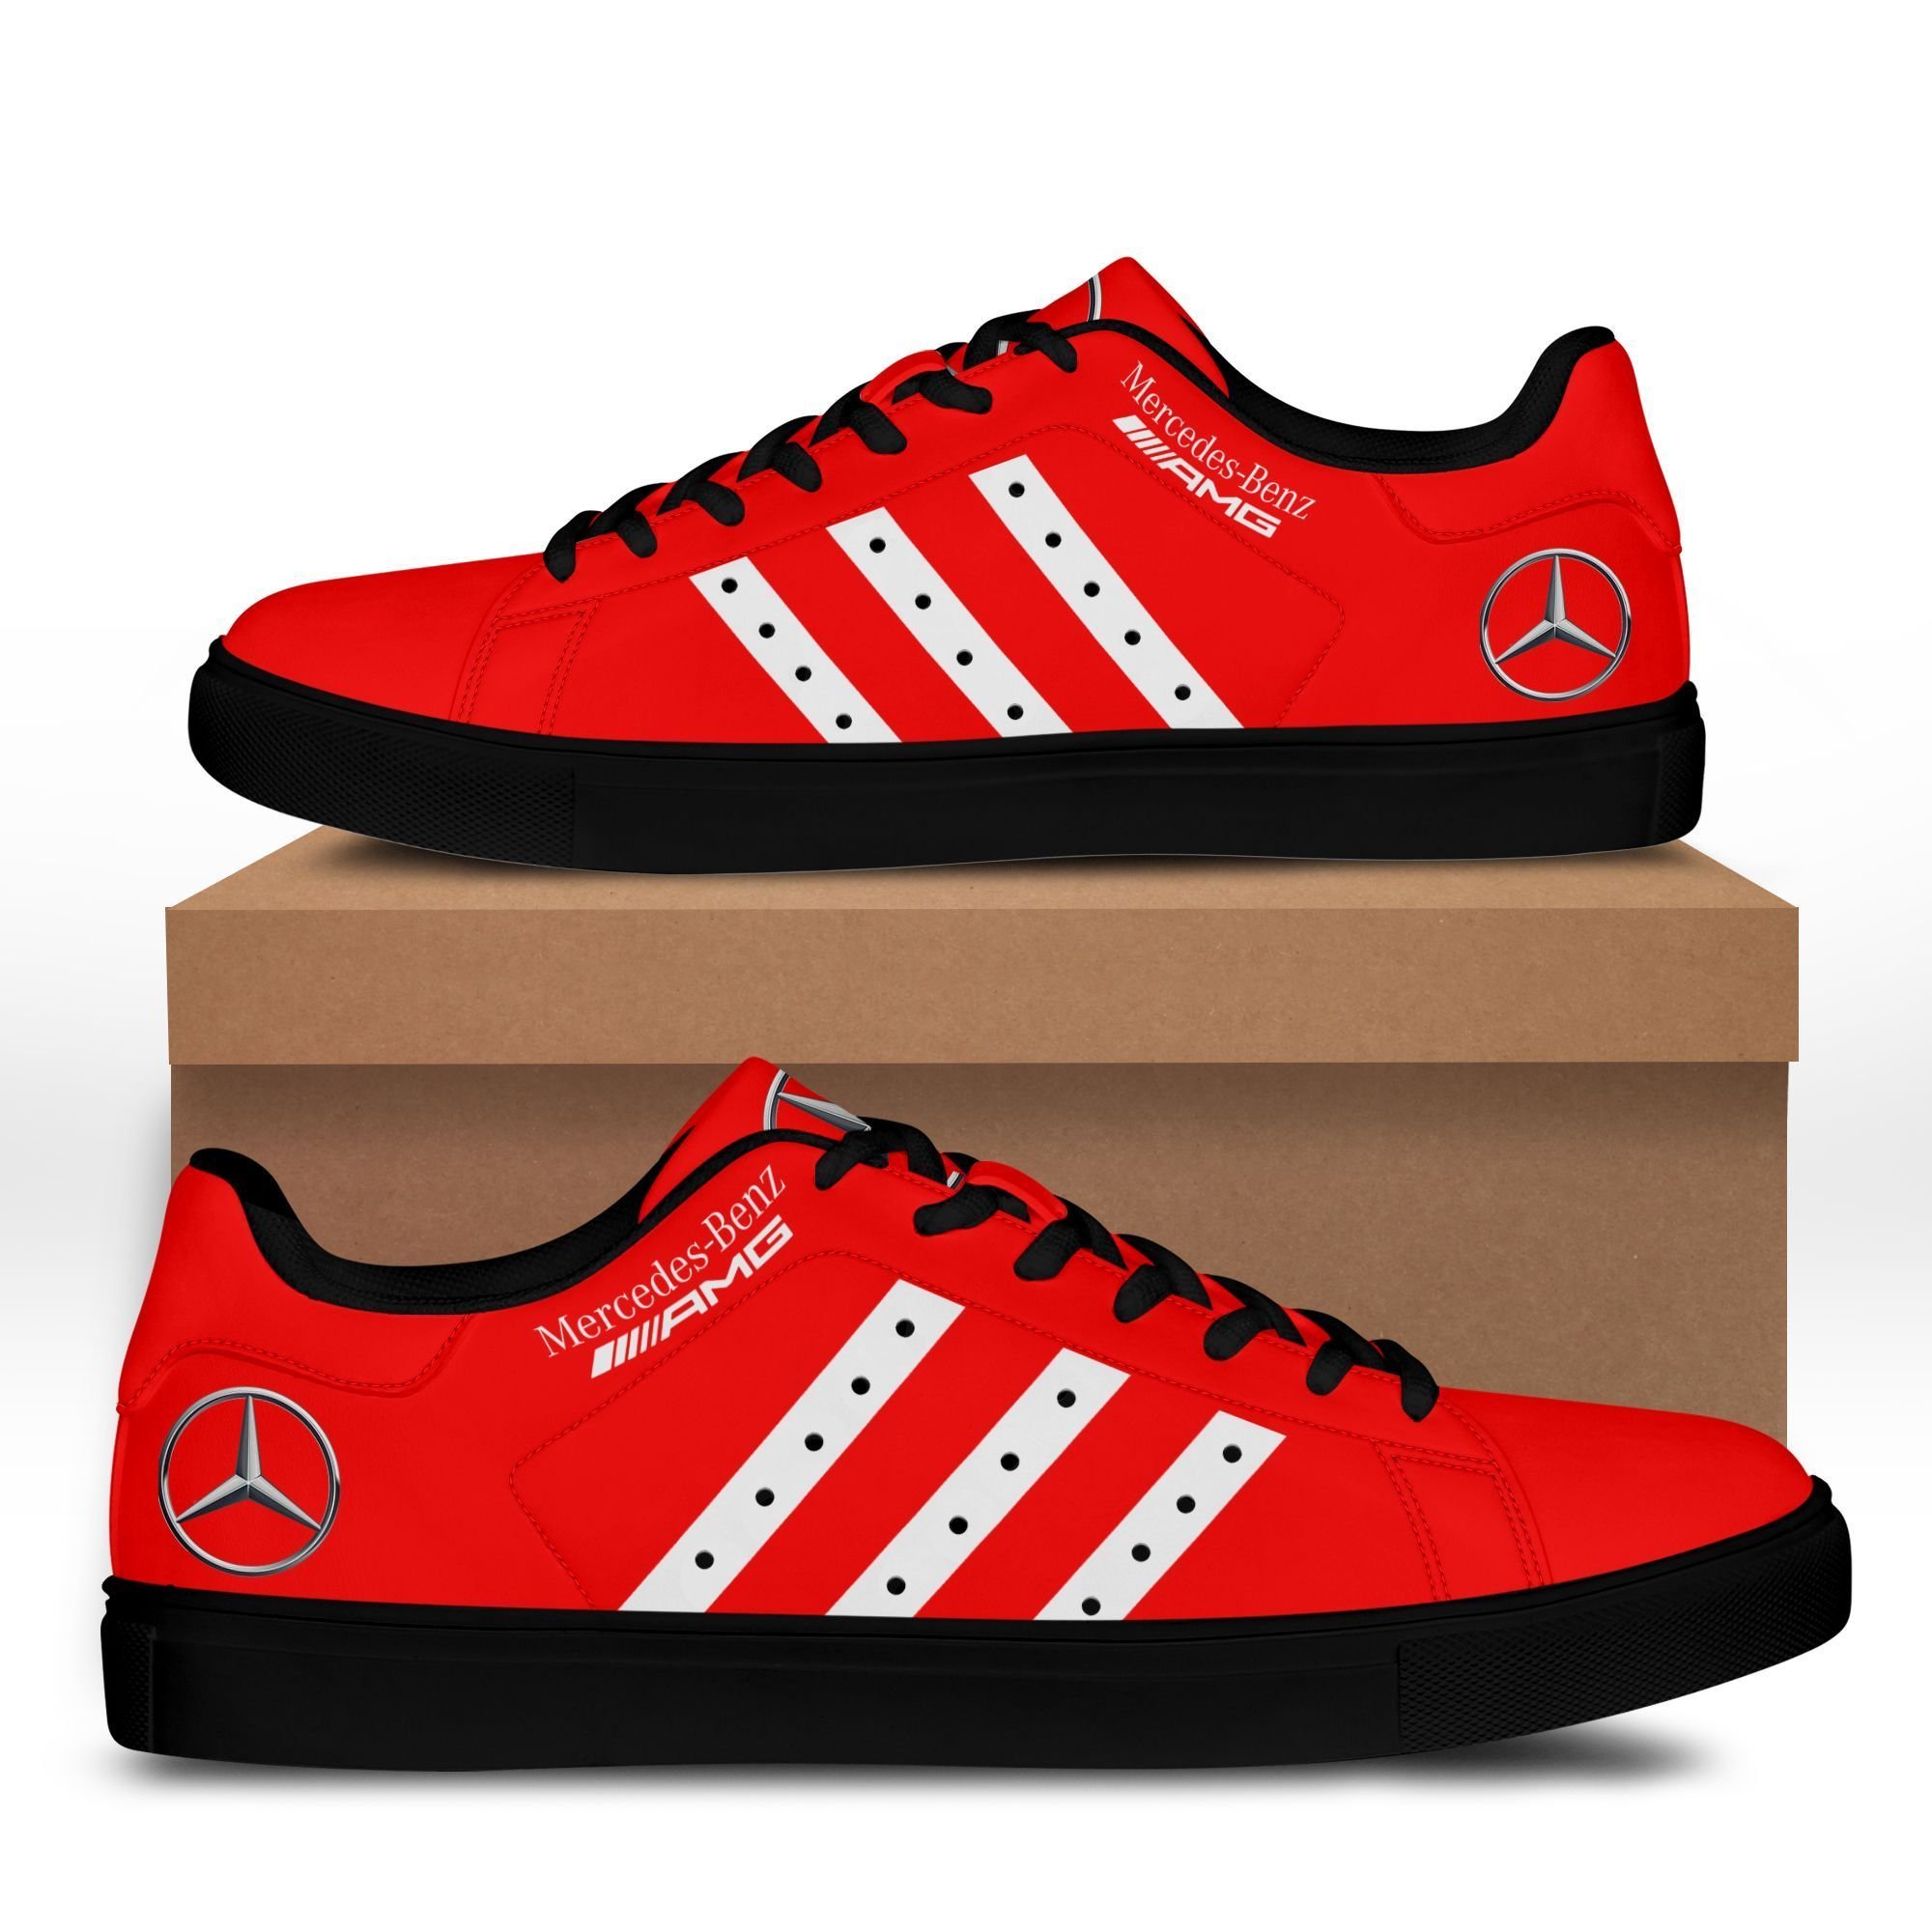 Mercedes Amg Dvt-Hl St Smith Shoes Ver 1 (Red)